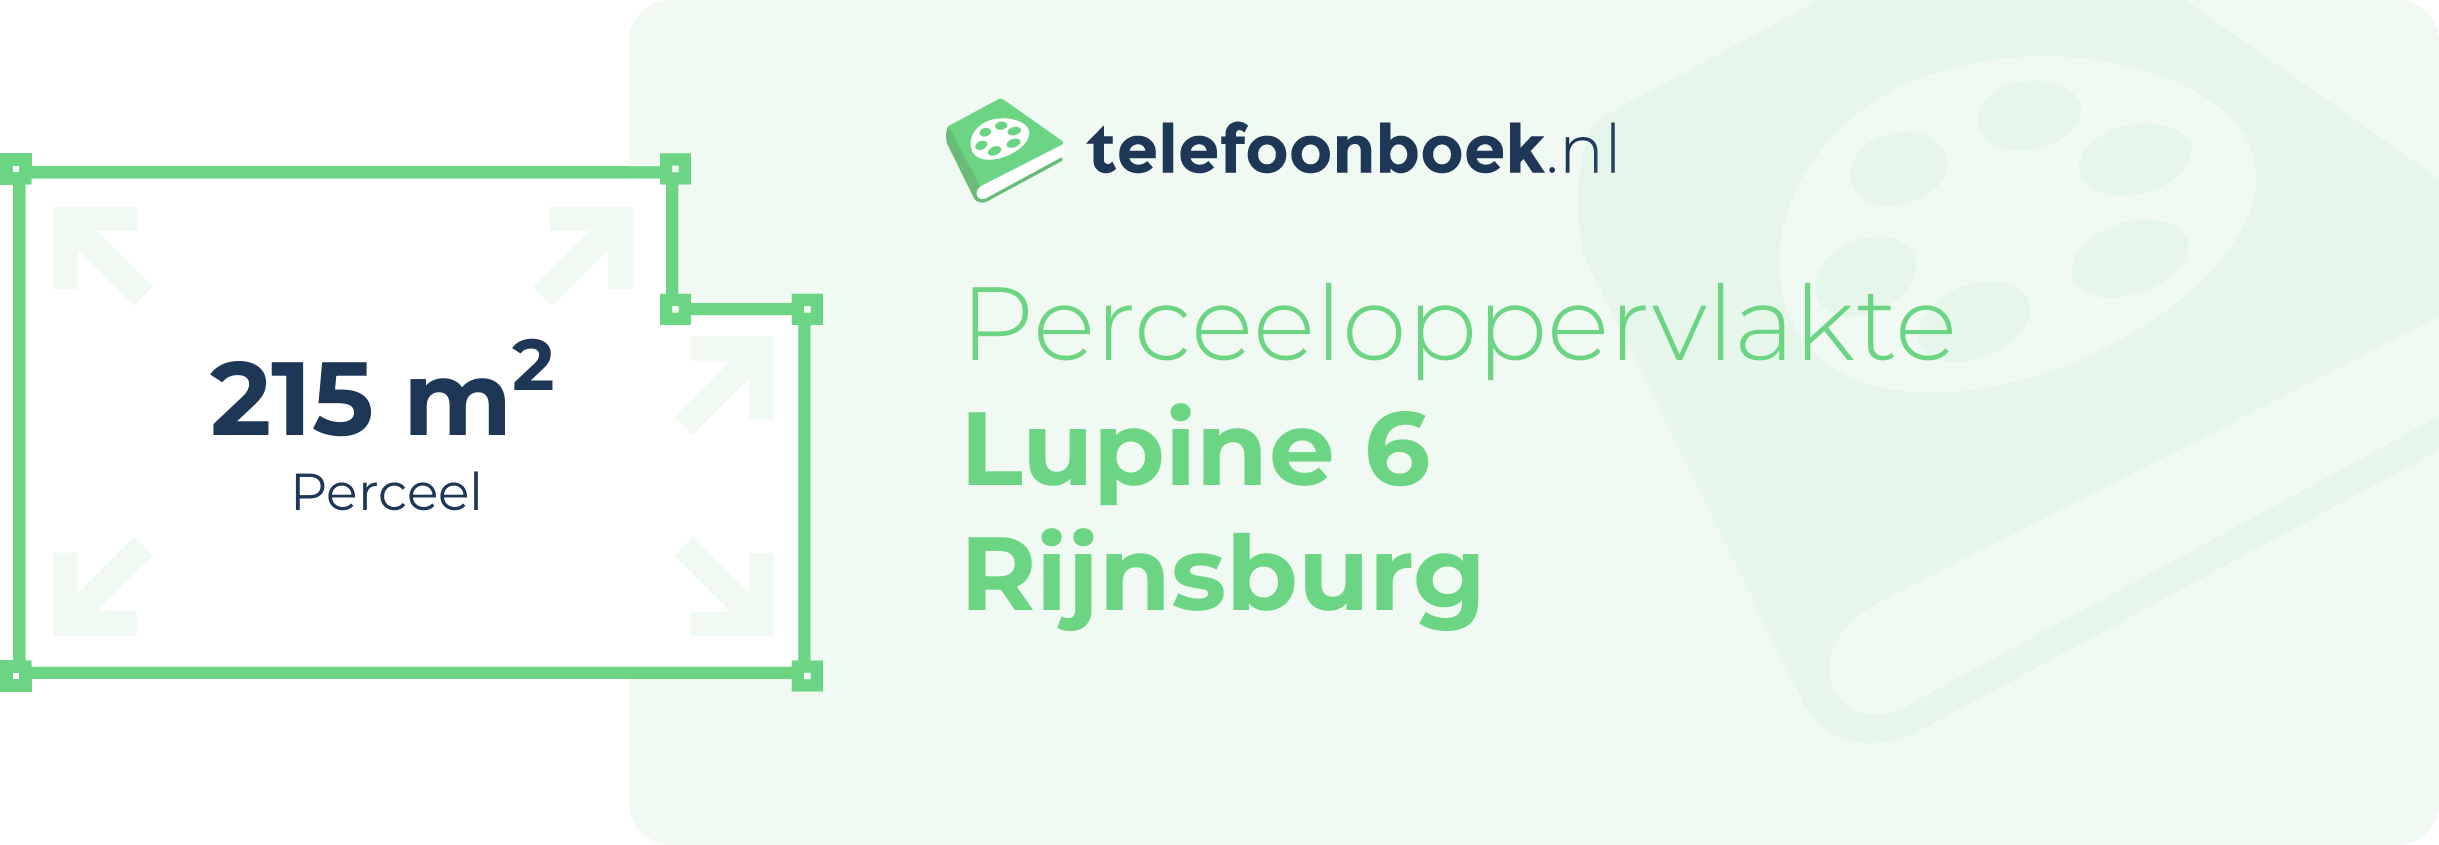 Perceeloppervlakte Lupine 6 Rijnsburg